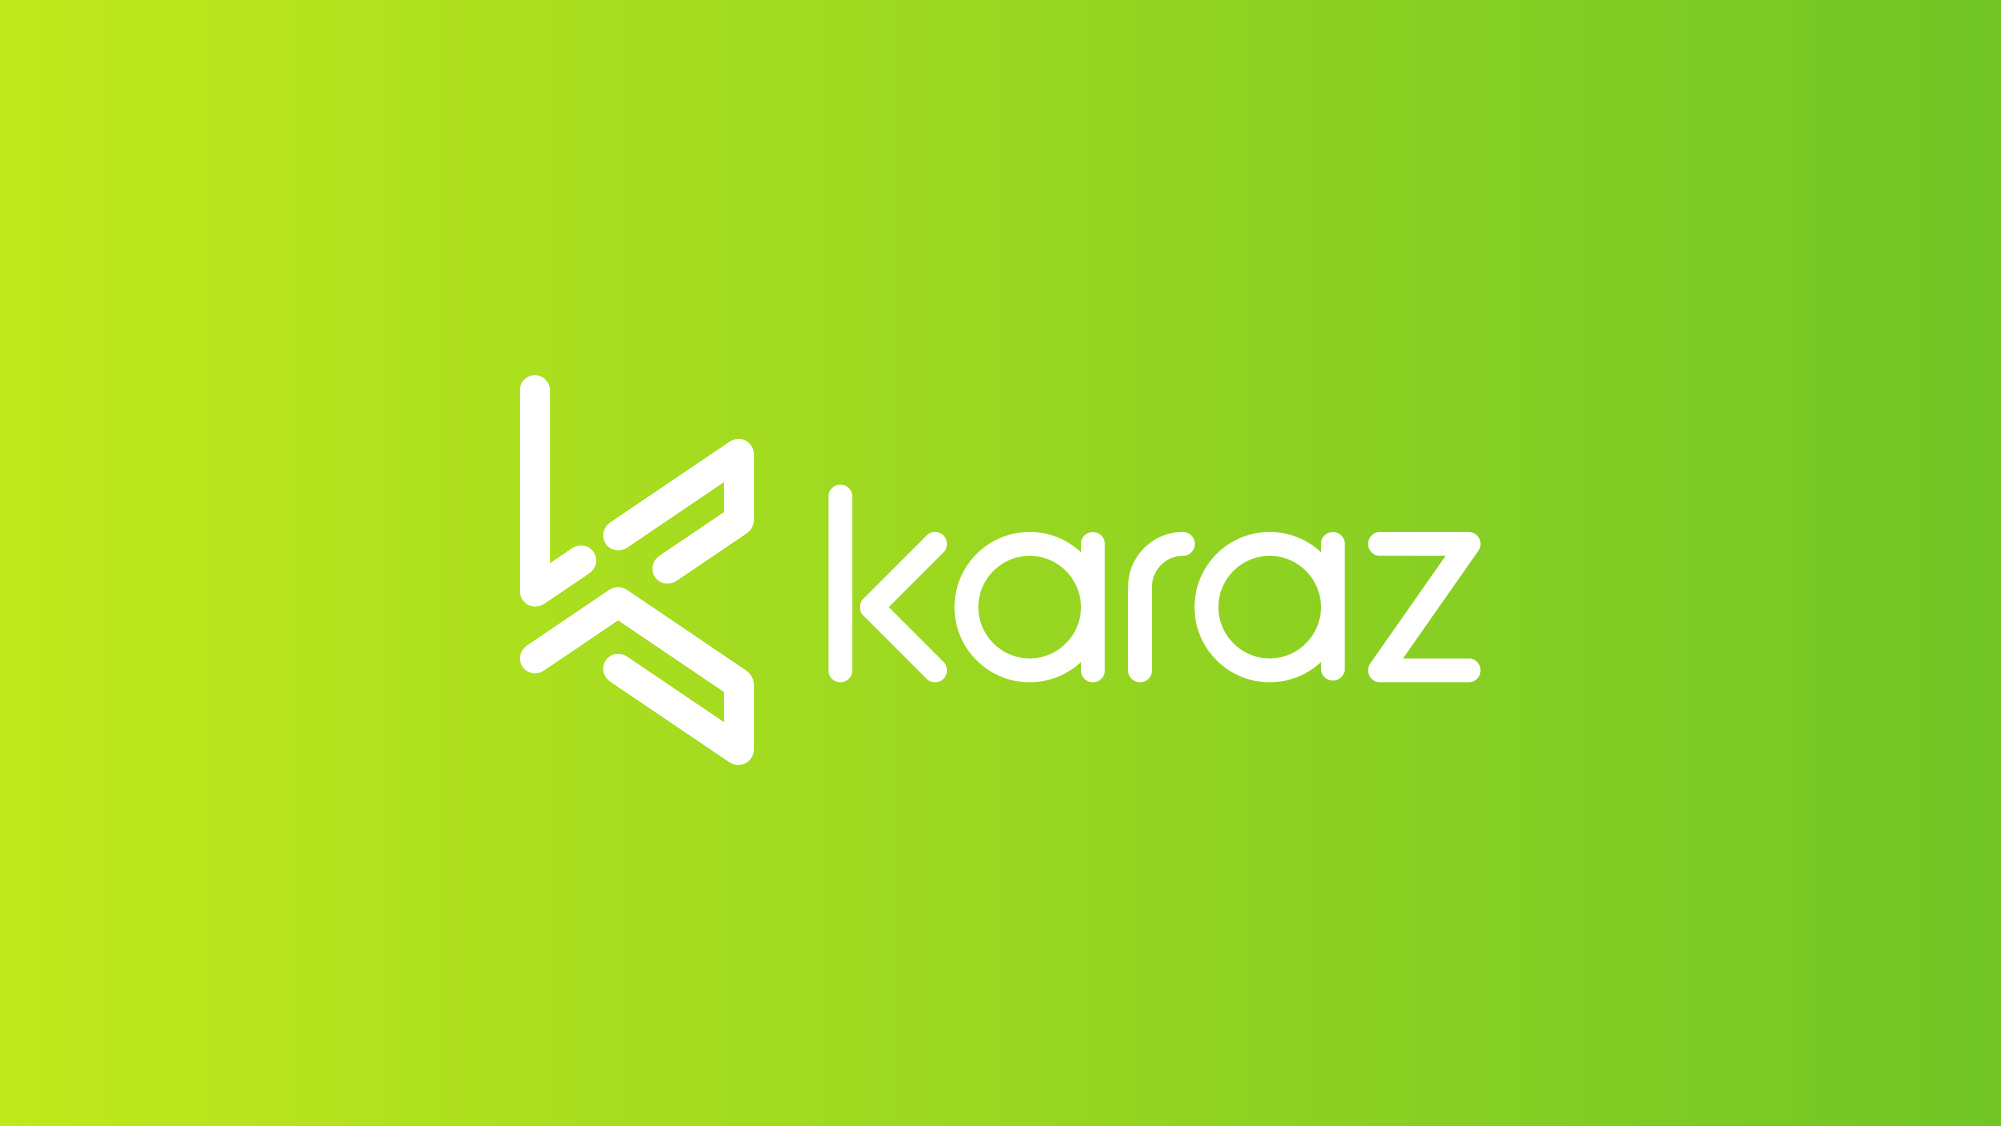 Karaz-Branding-By-Millimeter-Creative-Agency-10